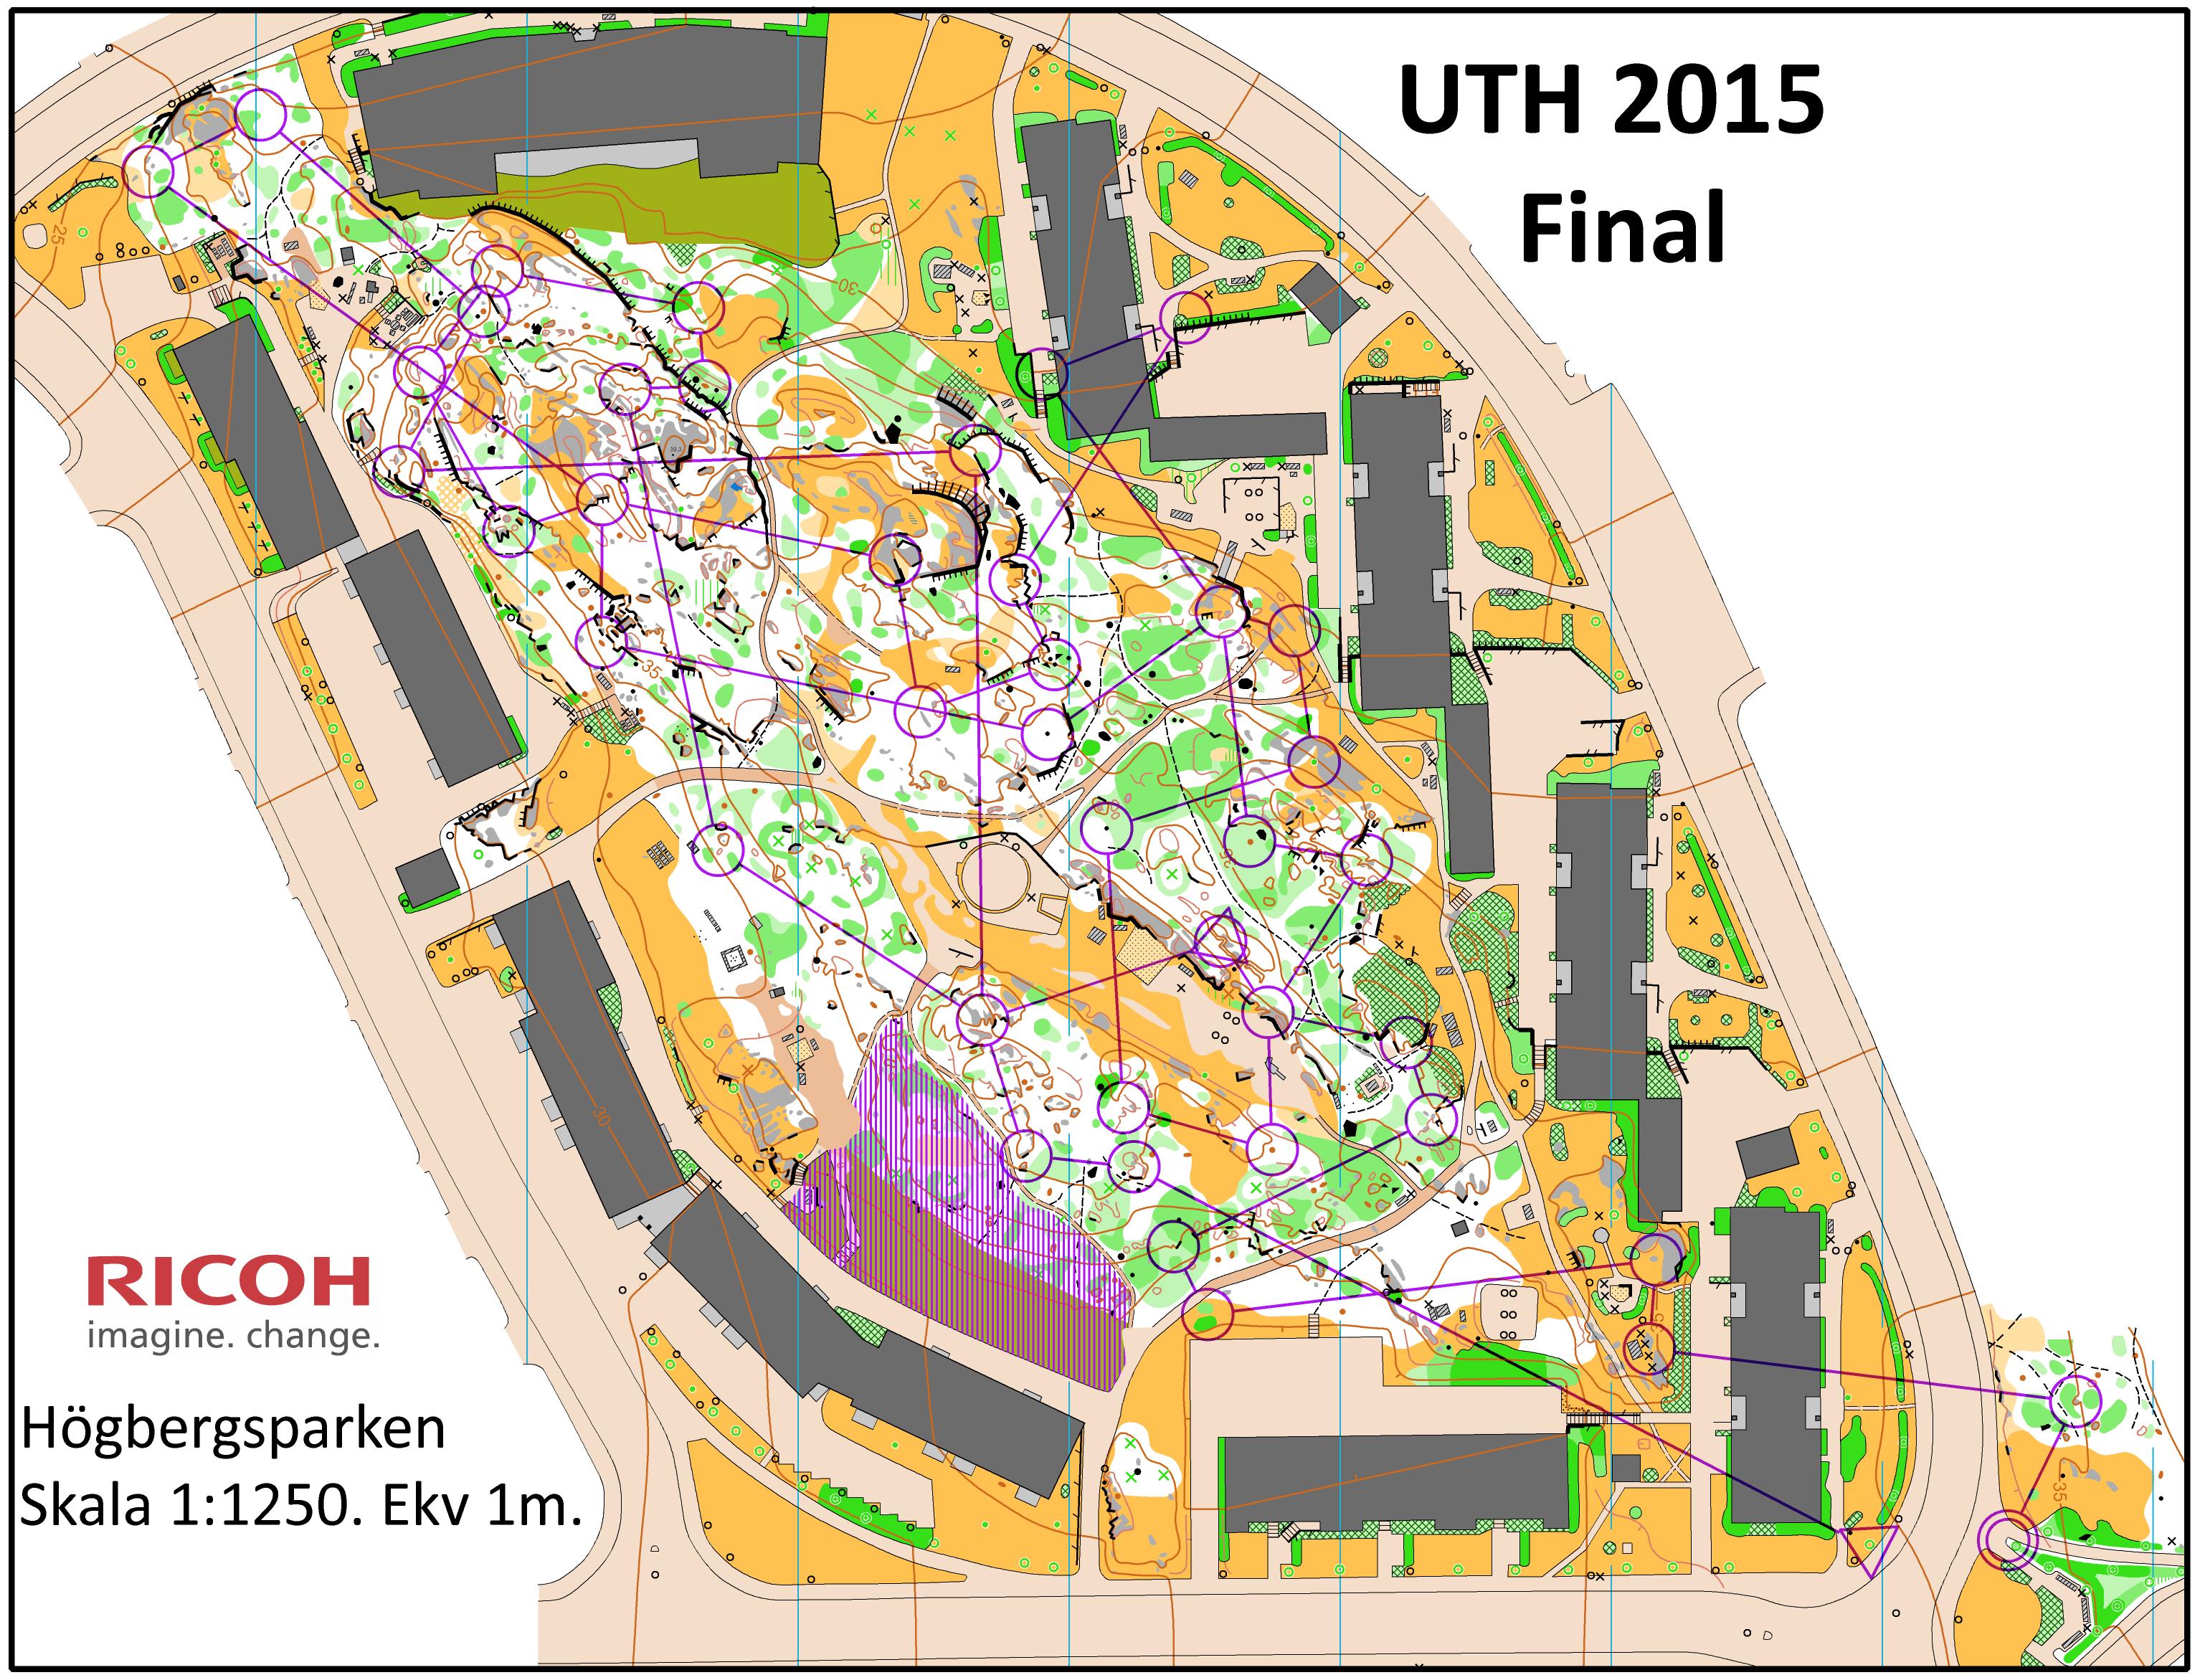 UTH15 - Ultrasprint (06-12-2015)